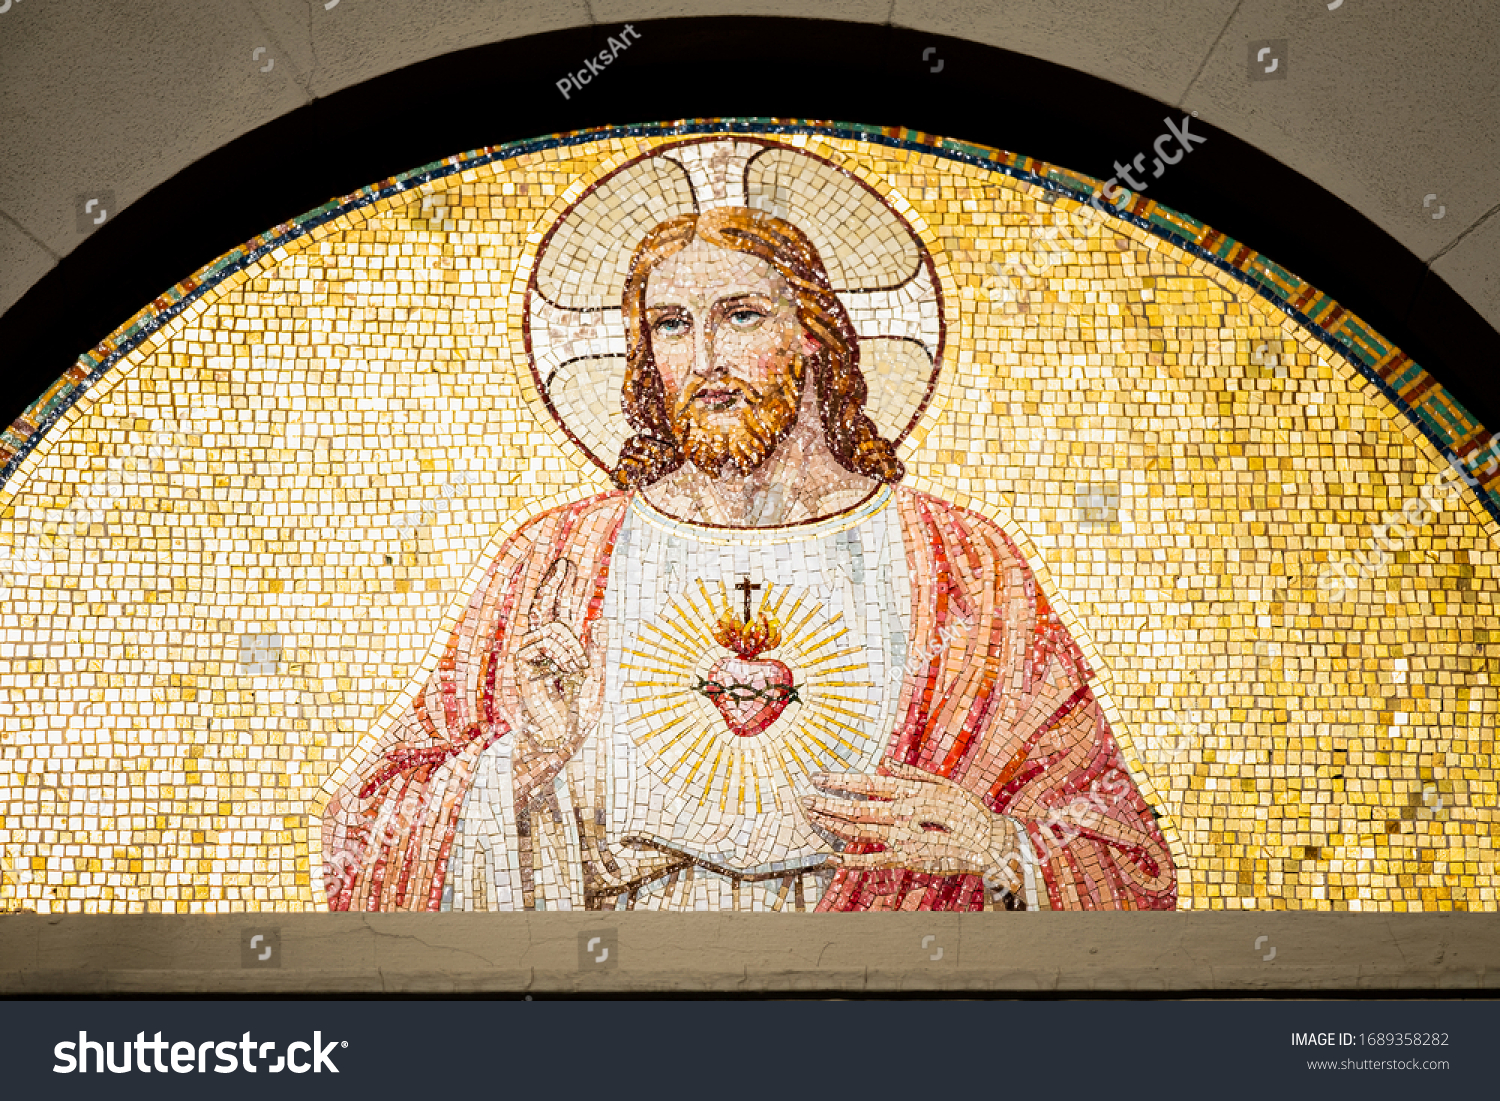 Mosaic fresco in a church, Italy #1689358282